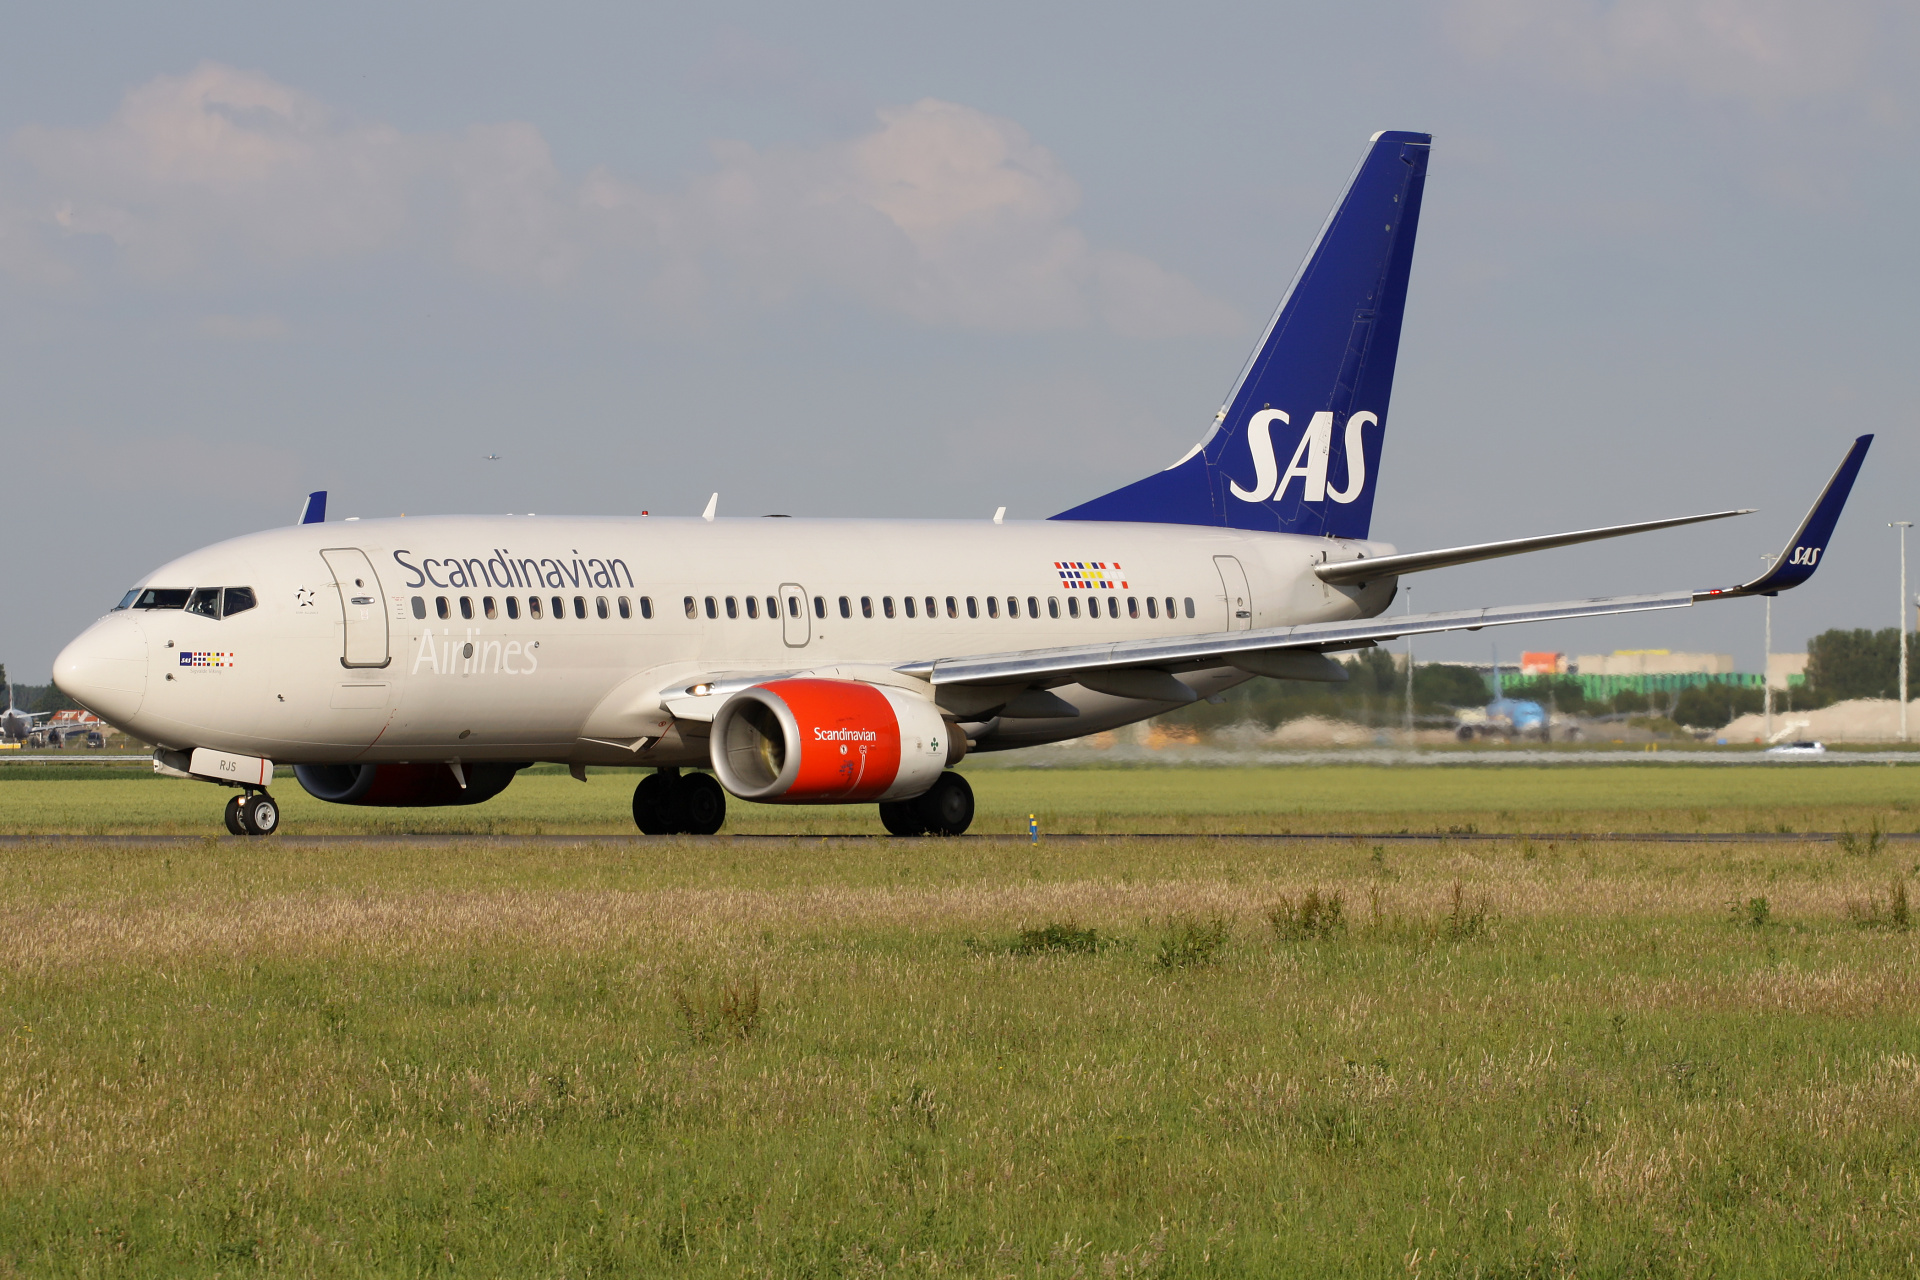 SE-RJS, SAS Scandinavian Airlines (Aircraft » Schiphol Spotting » Boeing 737-700)